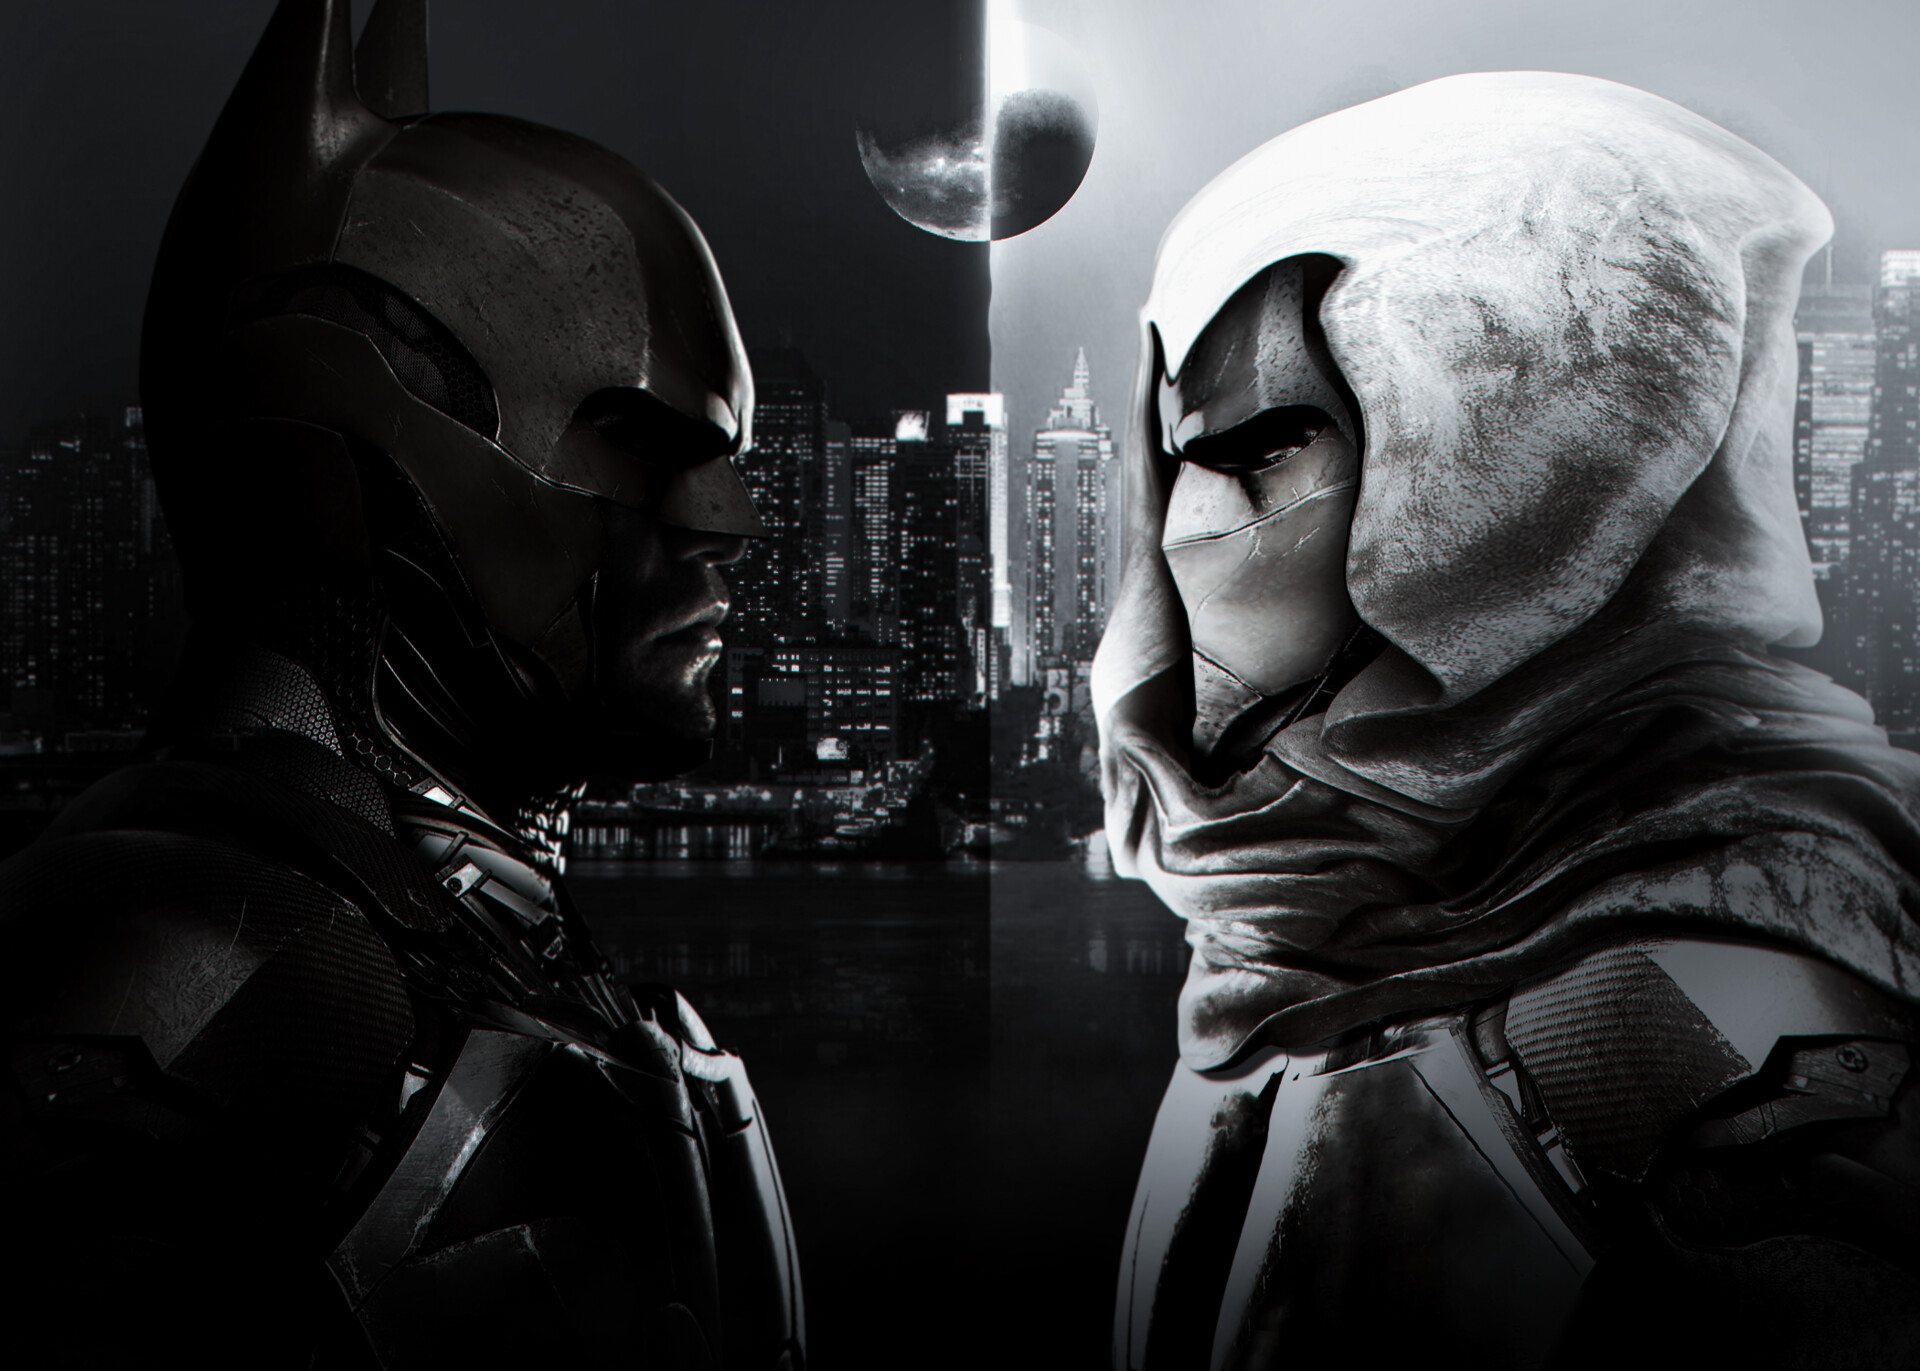 moon knight vs batman